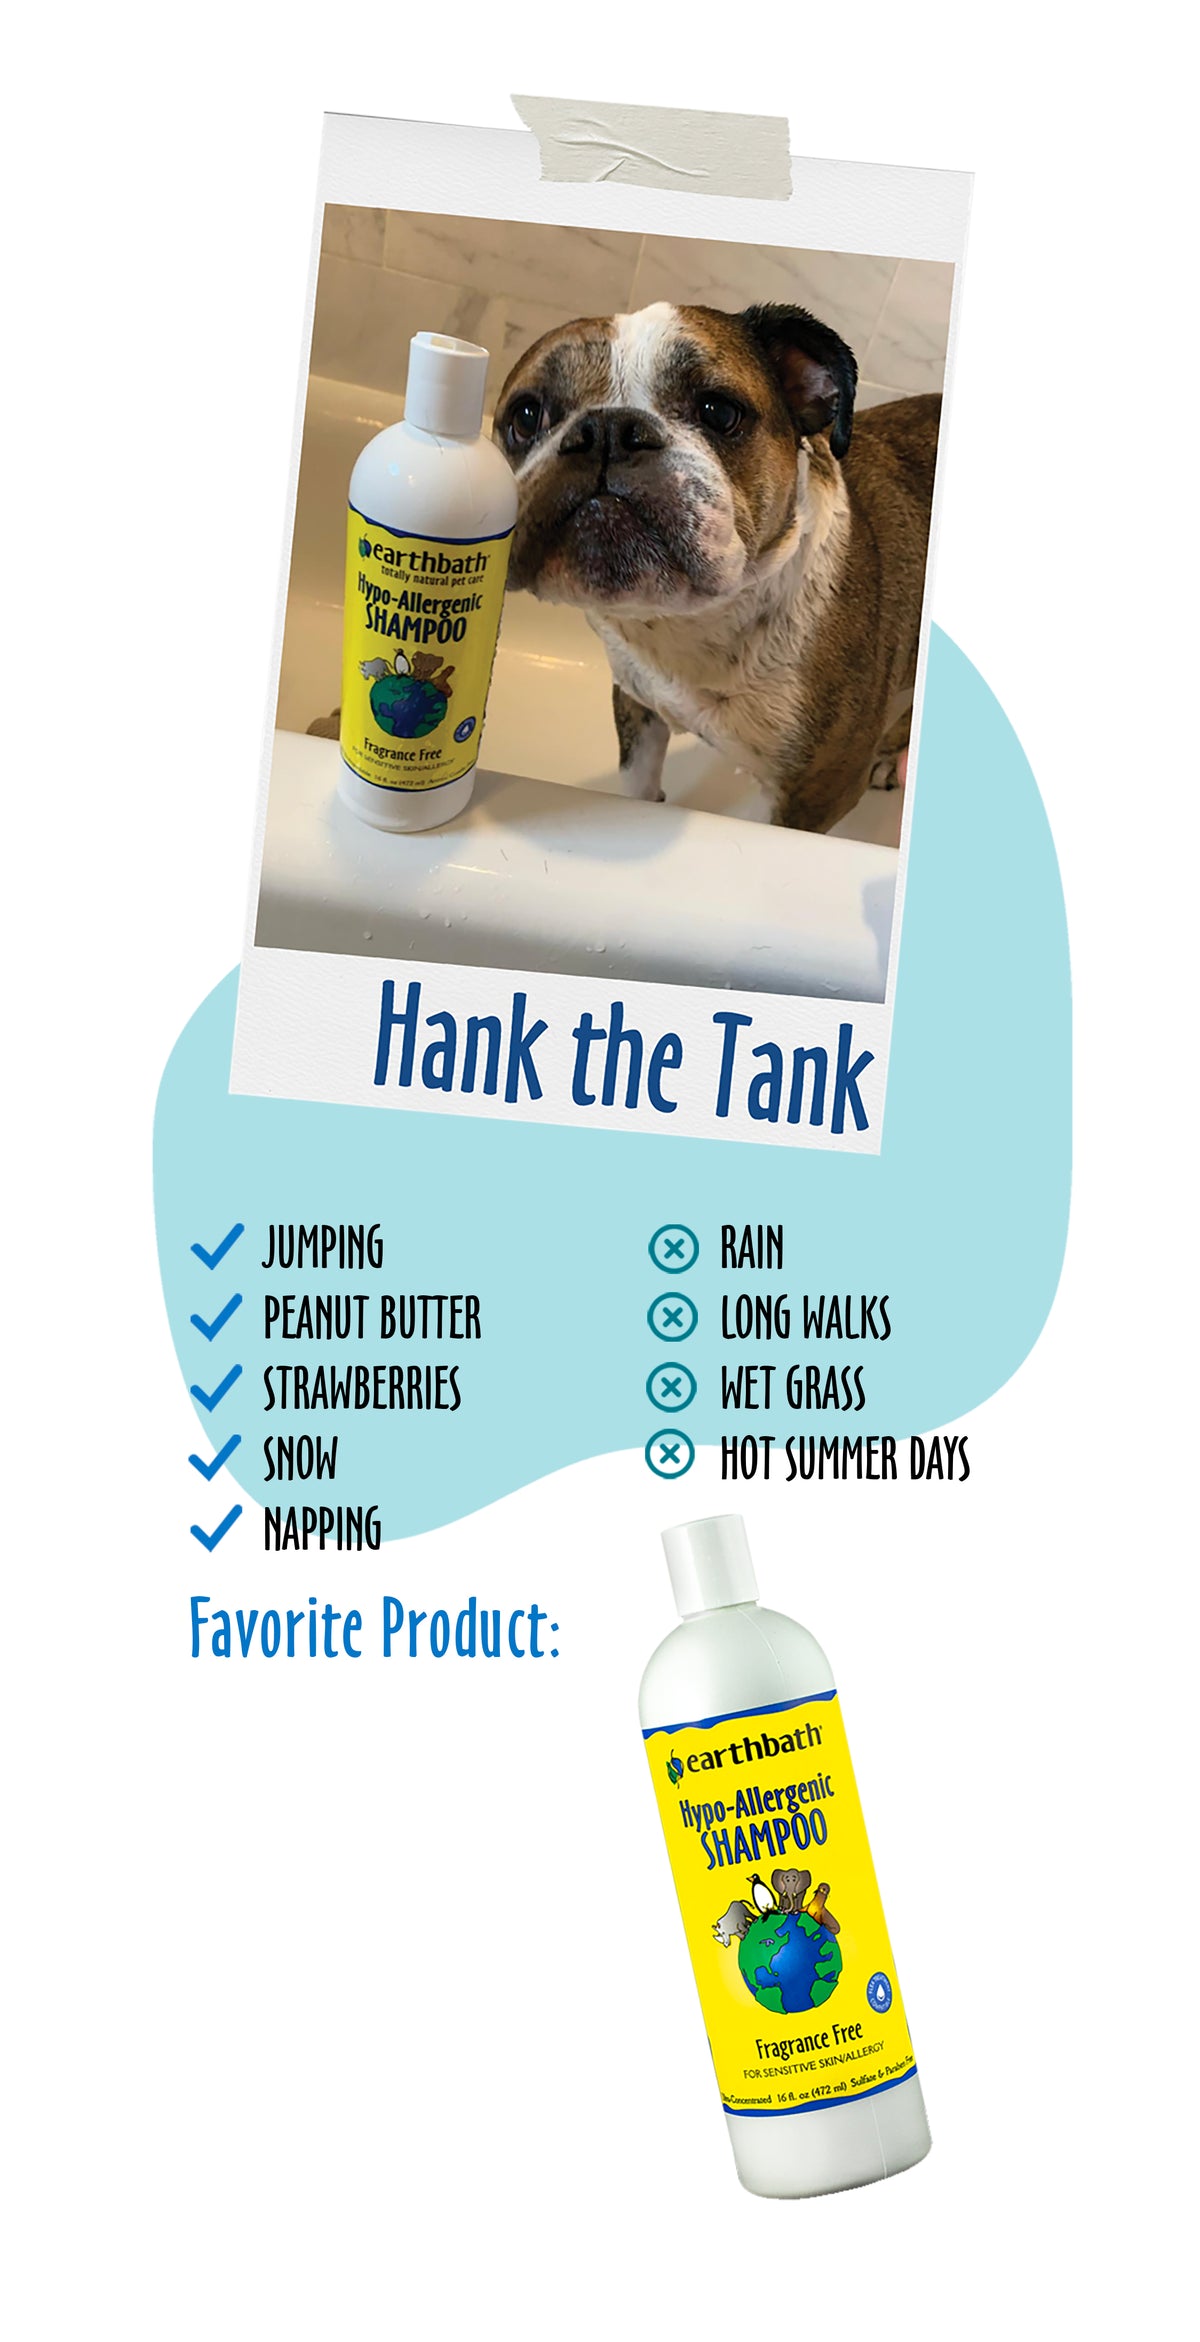 Hank The Tank Loves Hypoallergenic Shampoo